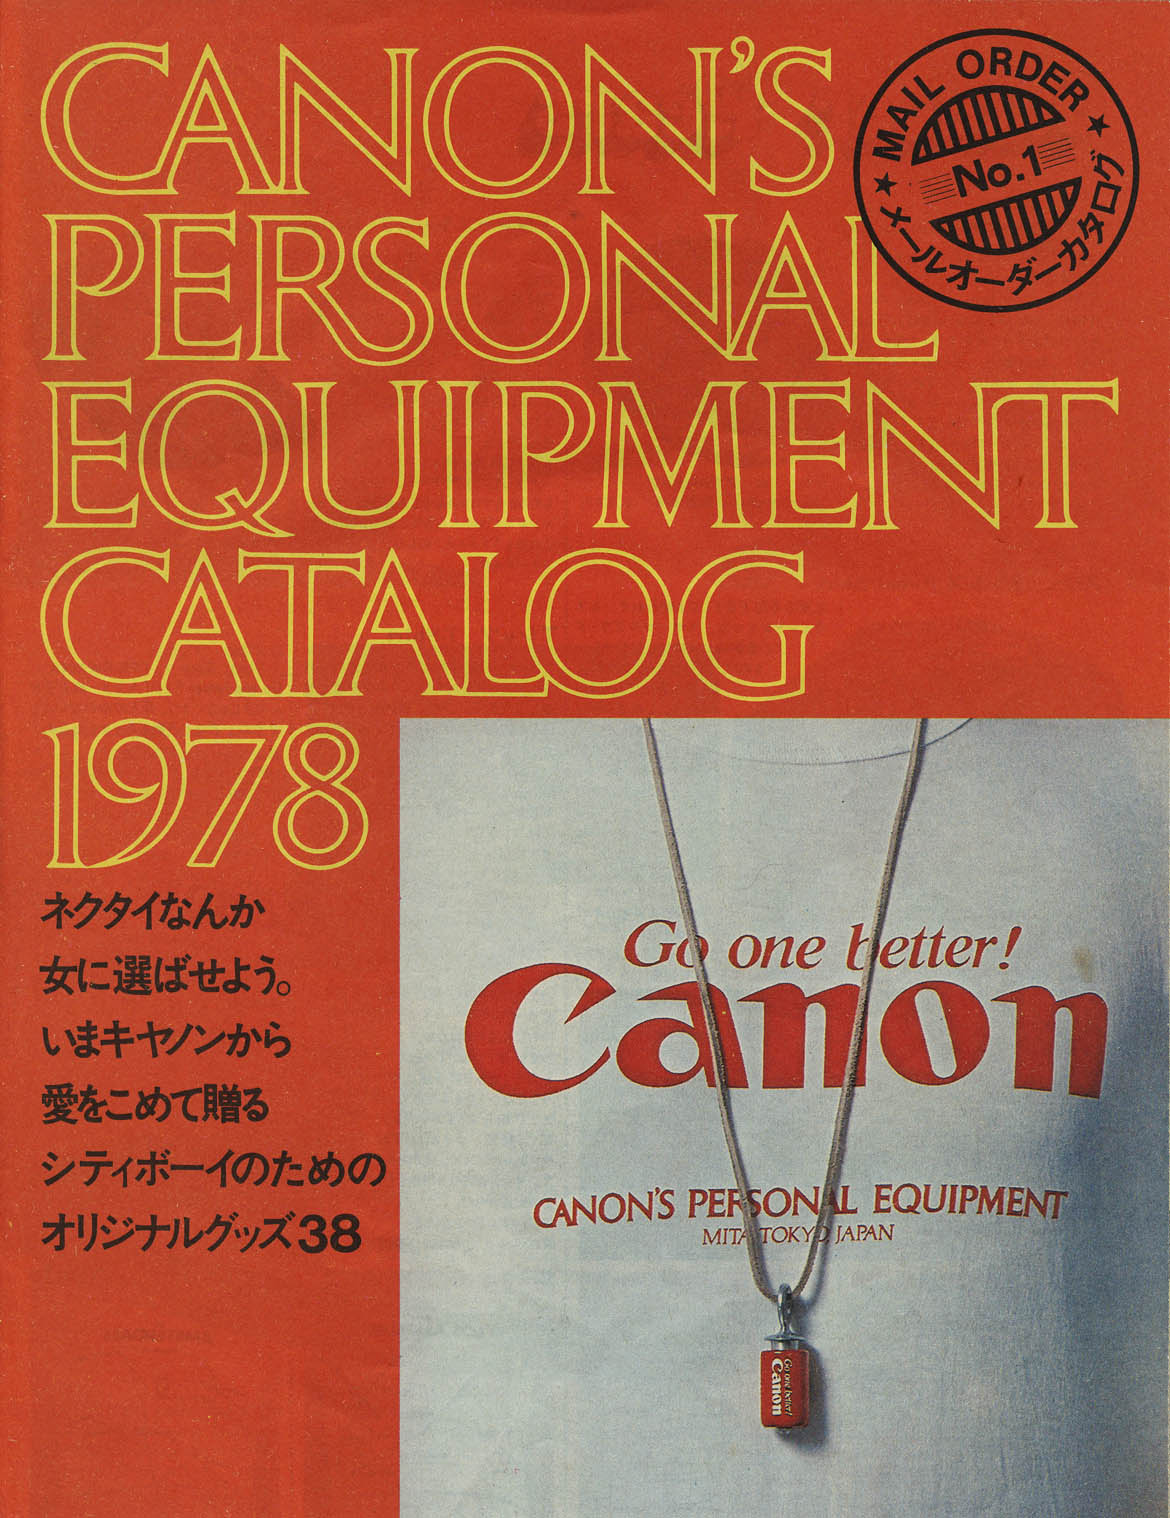 C.P.E. CATALOG 1978』 | hiroyaikedaの物欲の館2